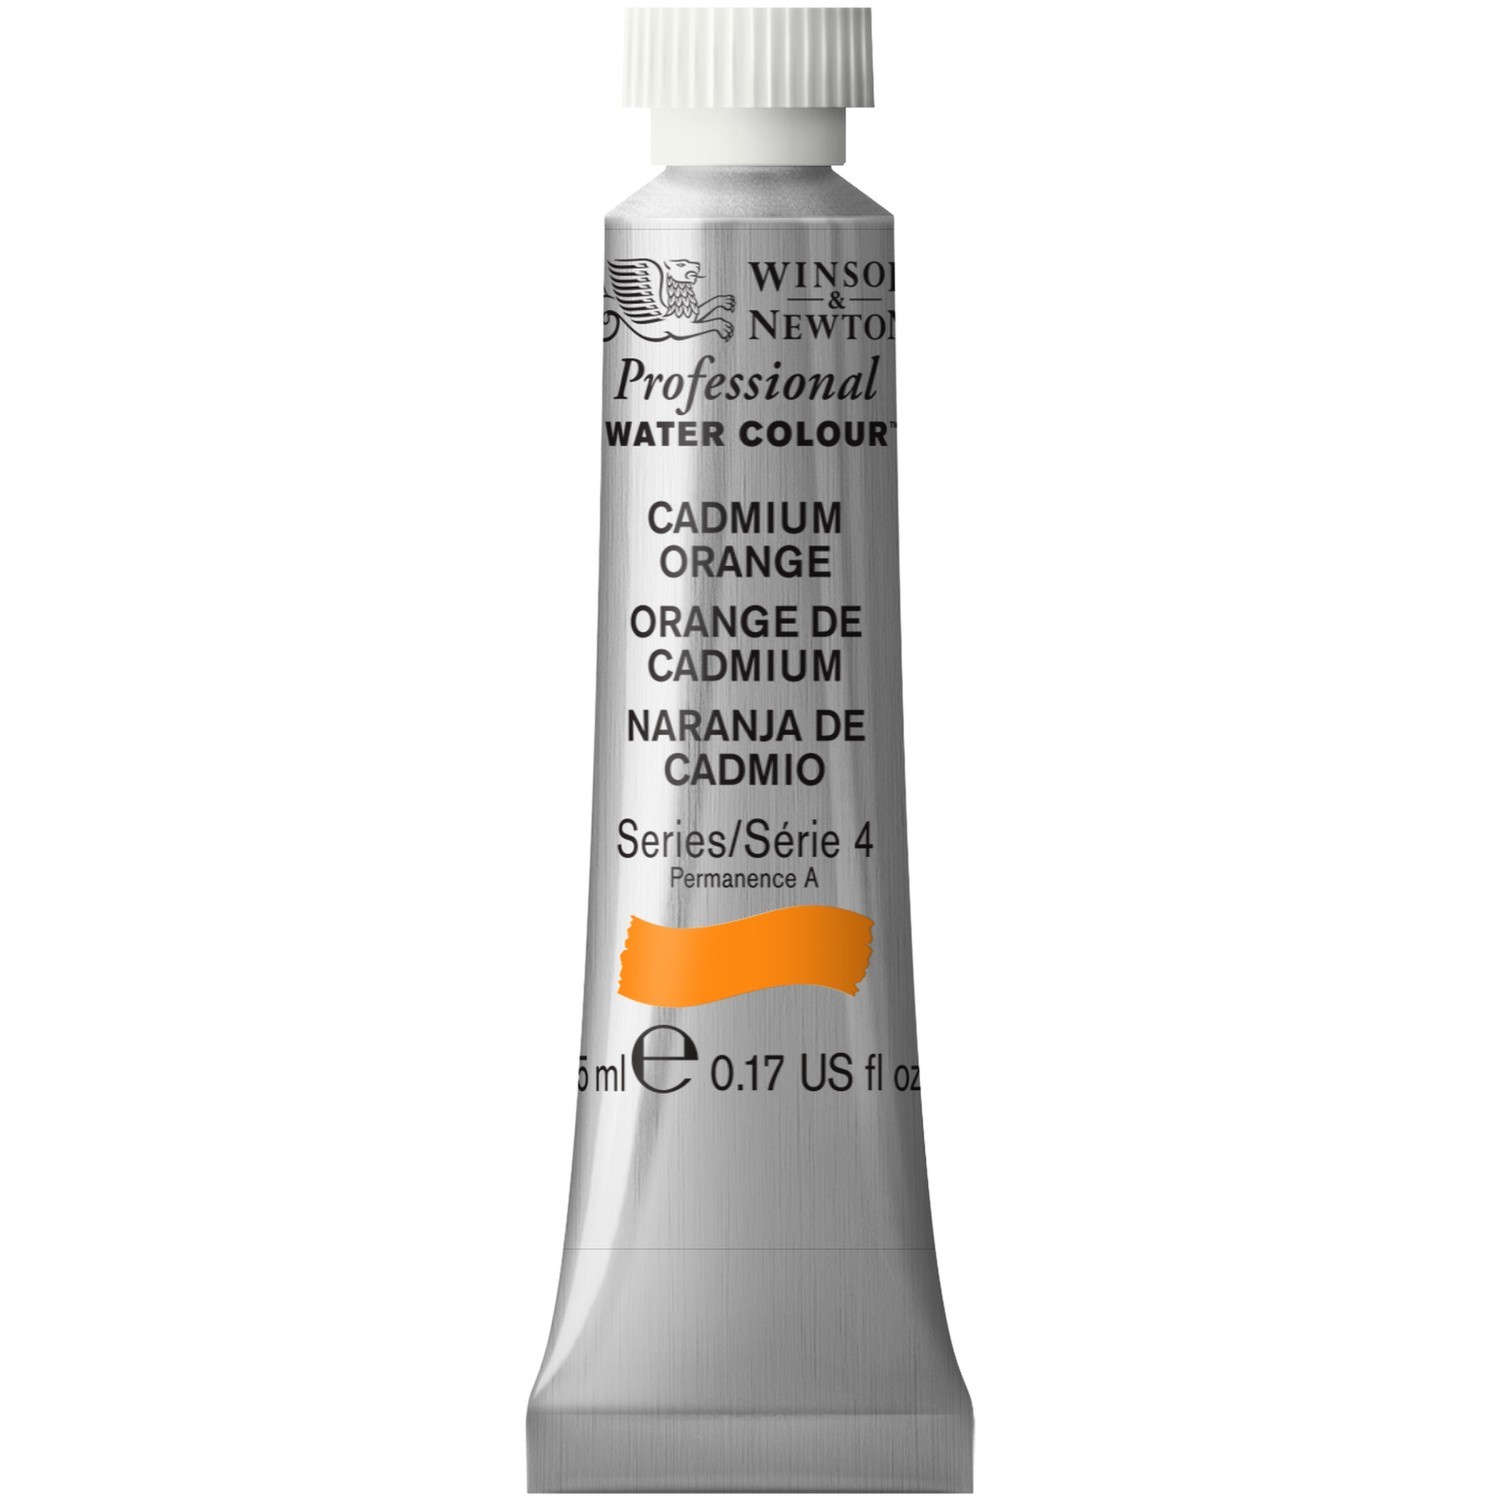 Winsor and Newton 5ml Professional Watercolour Paint - Cadium Orange Image 1